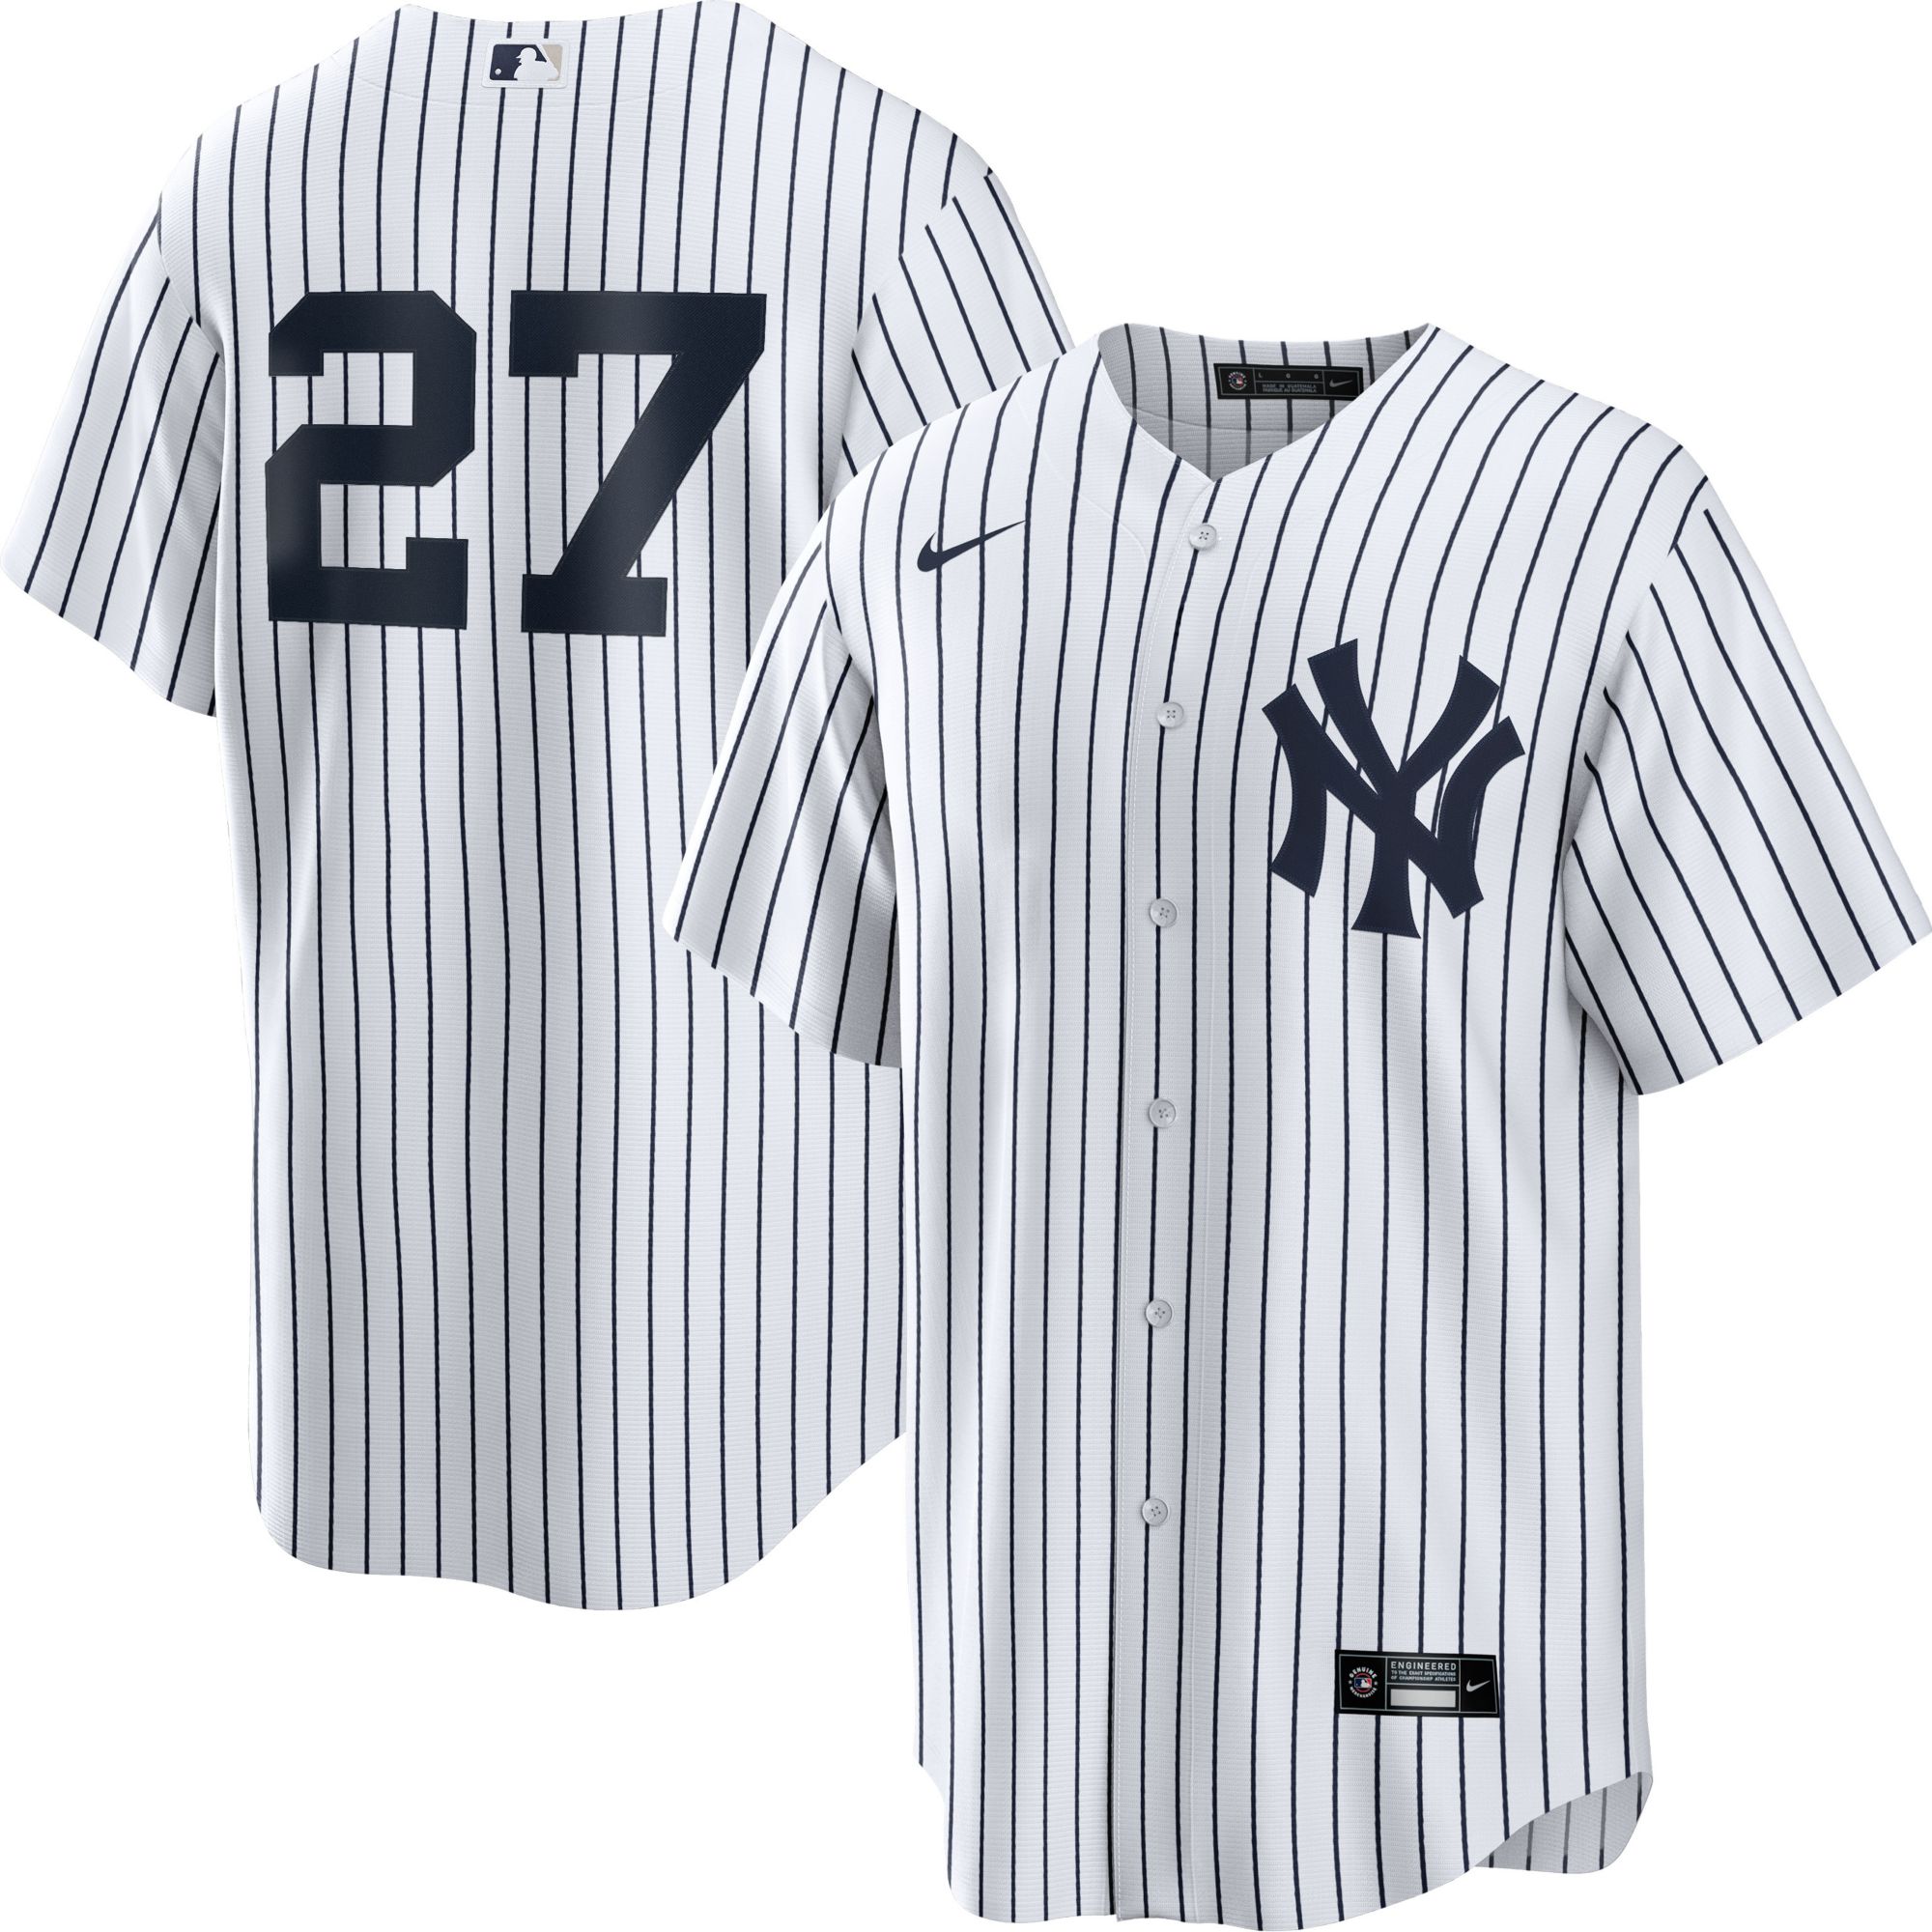 Nike Men's New York Yankees Aaron Judge #99 Navy T-Shirt